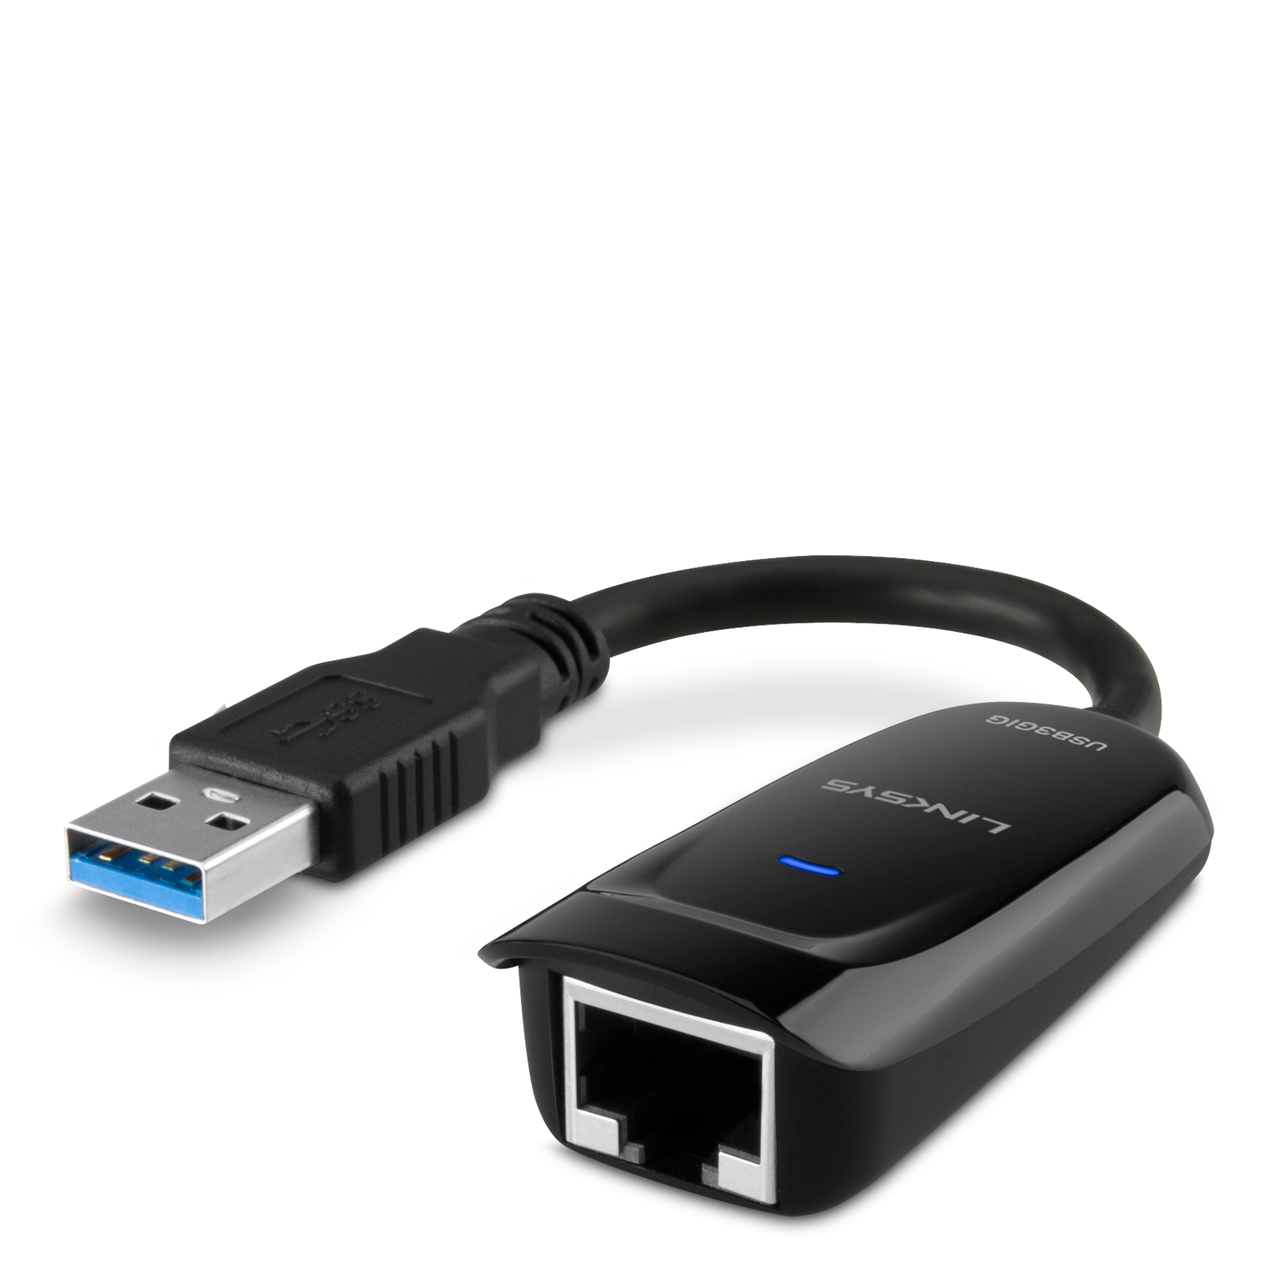 Linksys USB3GIG 3.0 Gigabit Ethernet Adapter | Linksys: